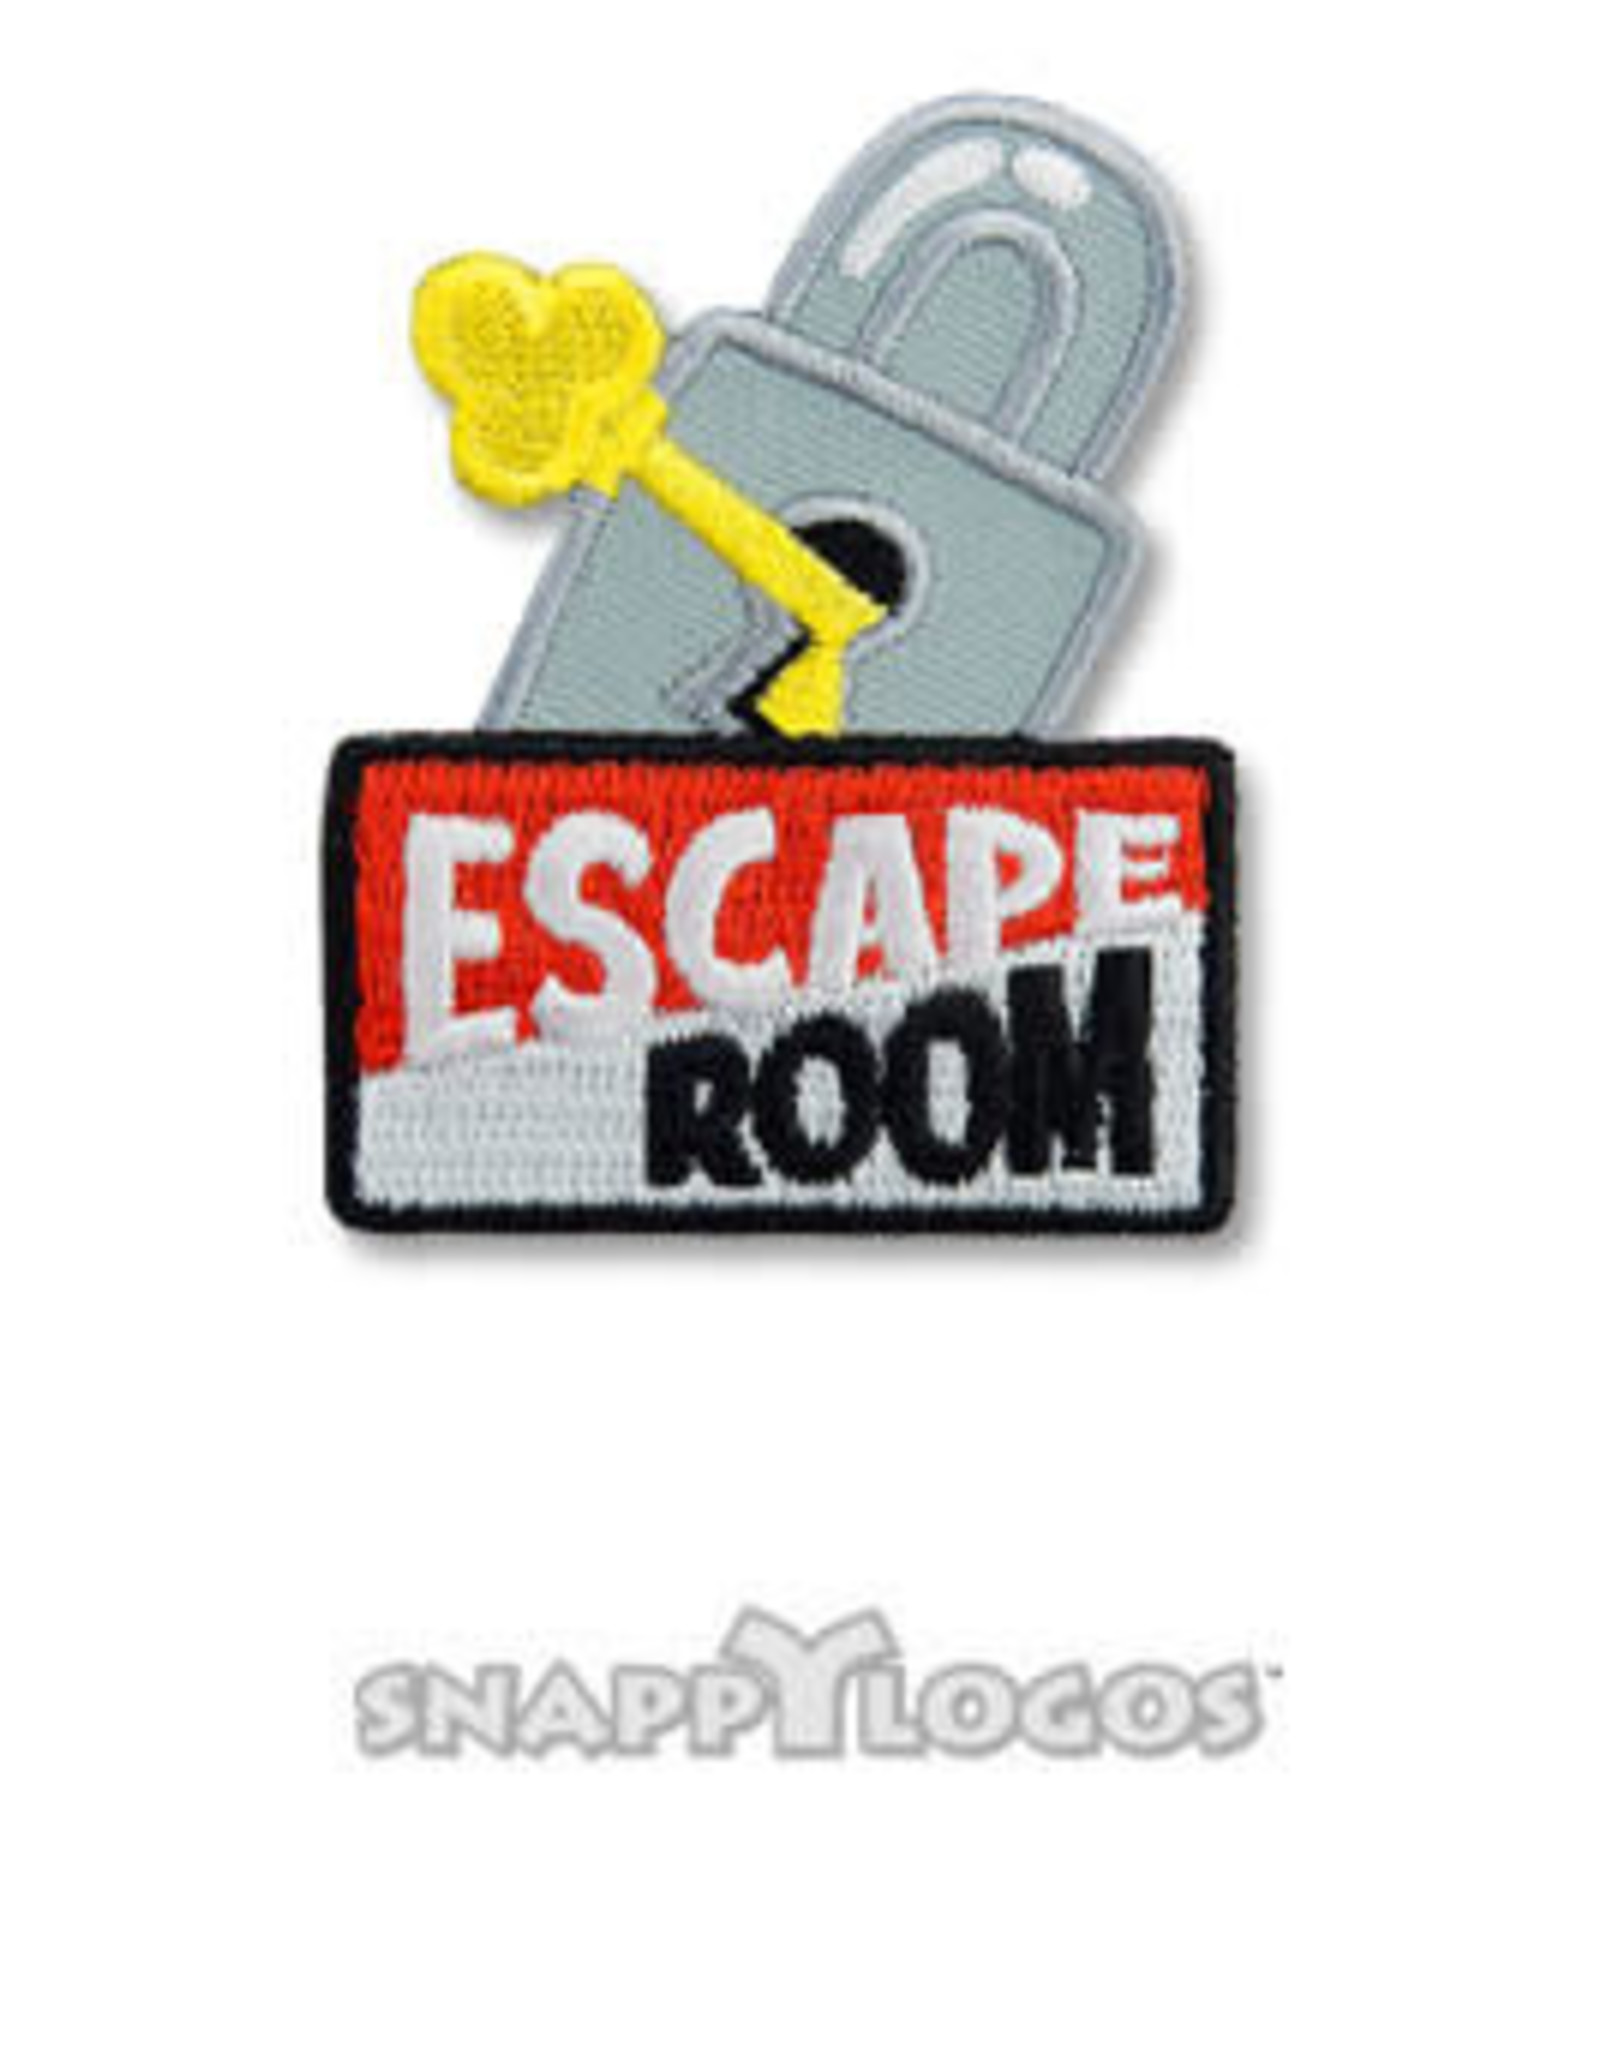 snappylogos Escape Room w/Key Lock Patch (7336)